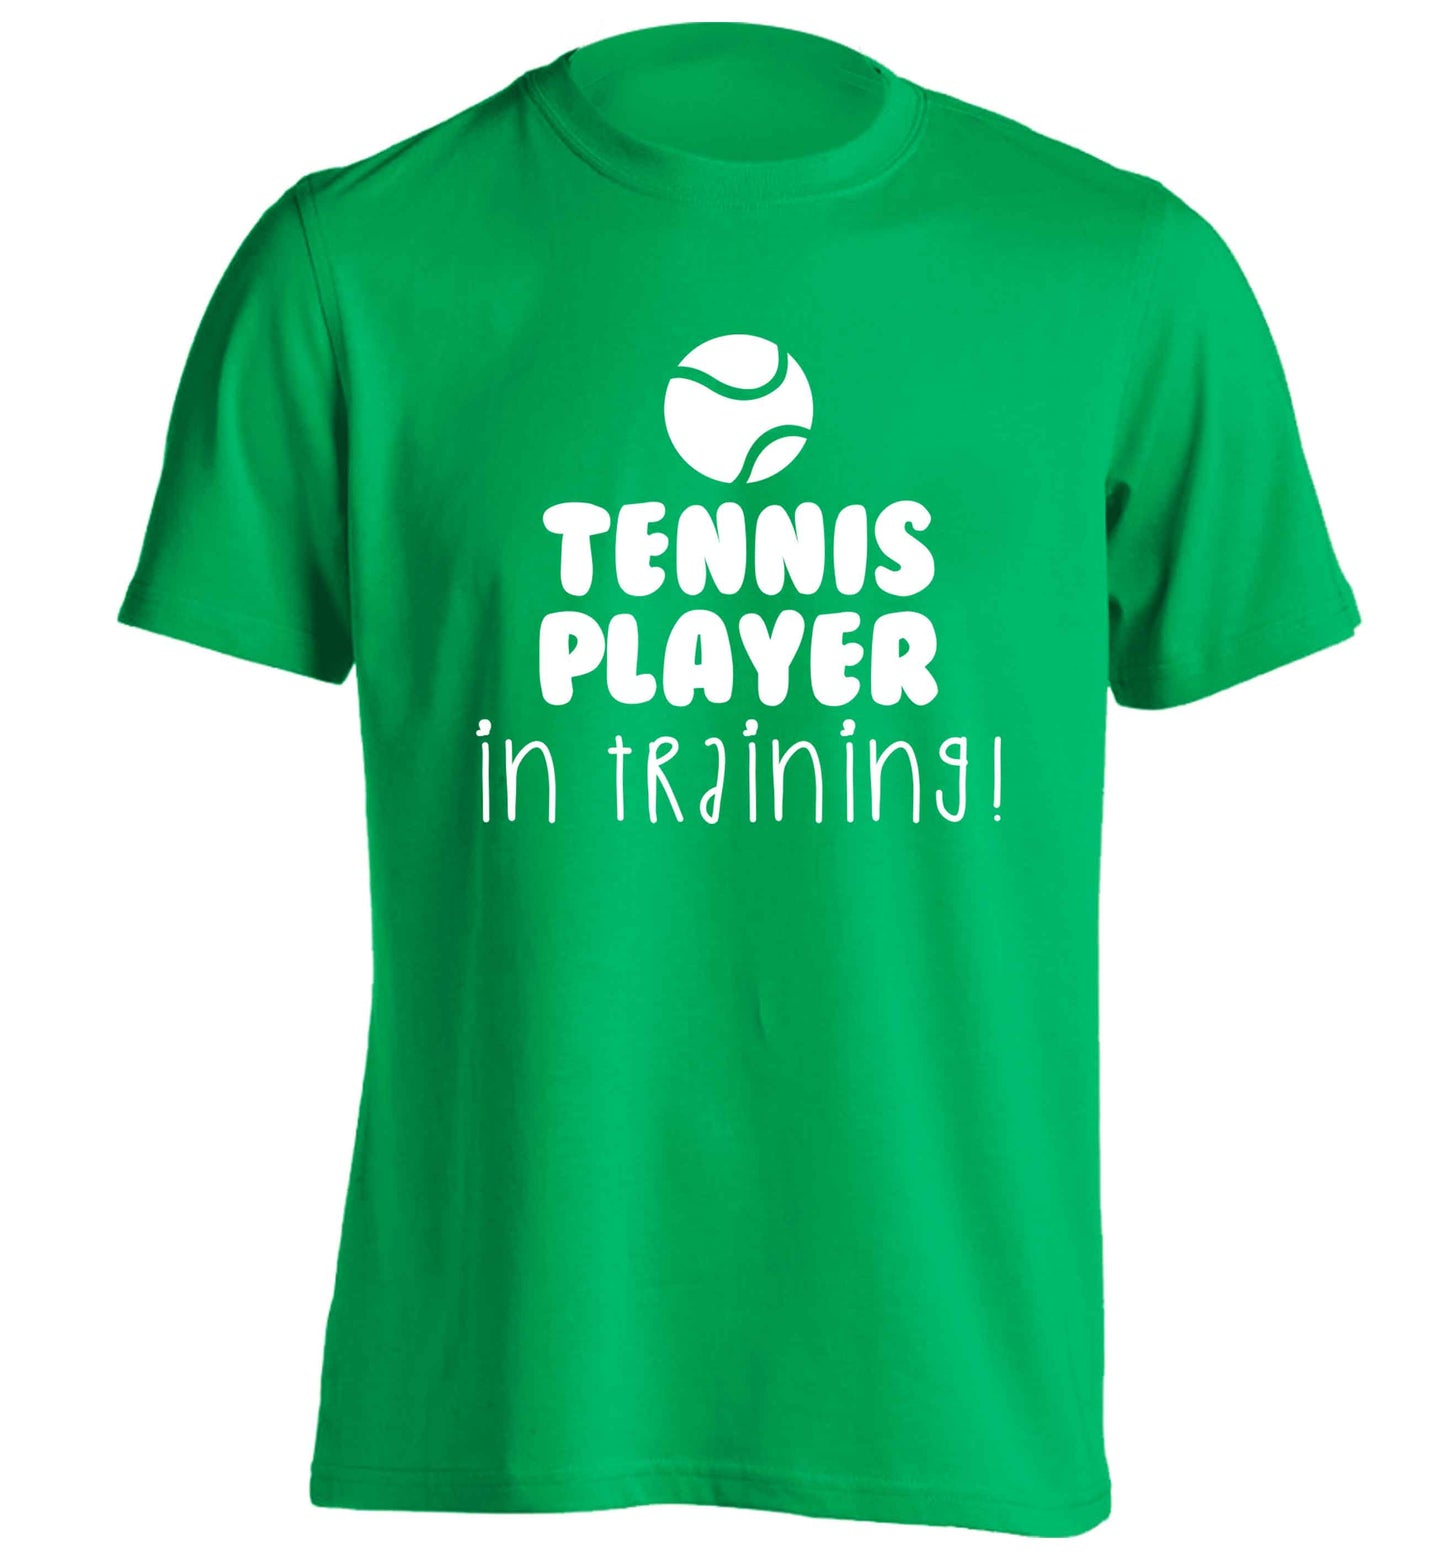 Tennis player in training adults unisex green Tshirt 2XL